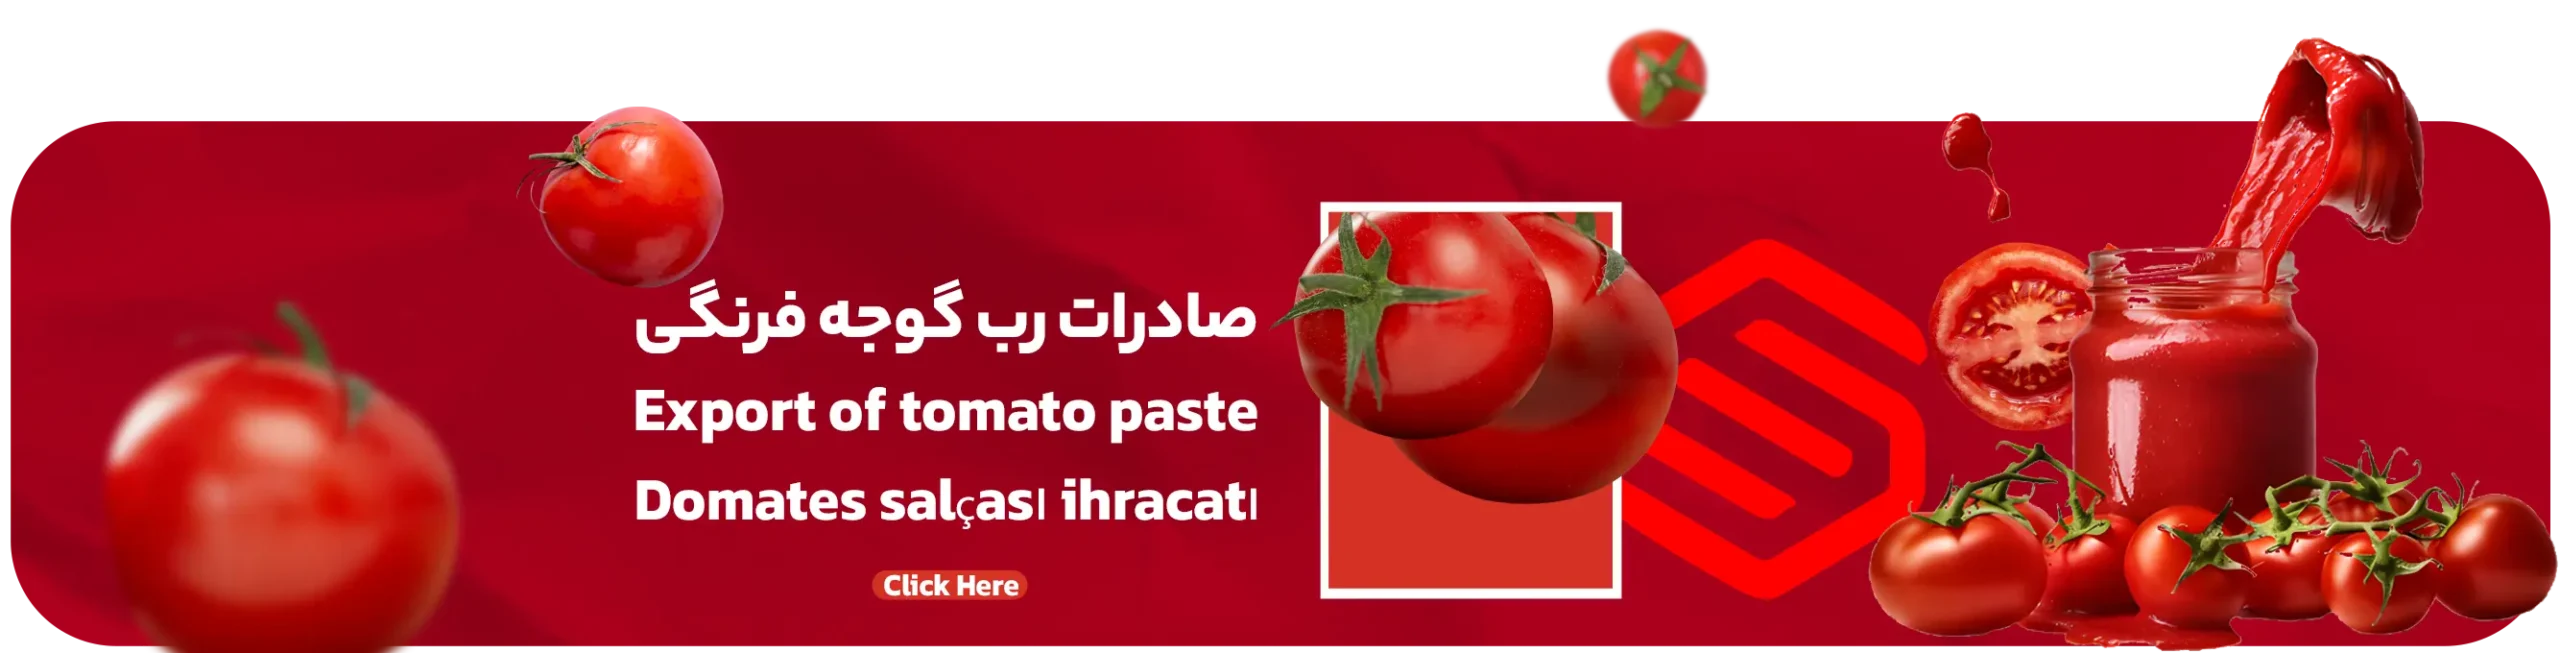 Tomato paste banner scaled 1 1